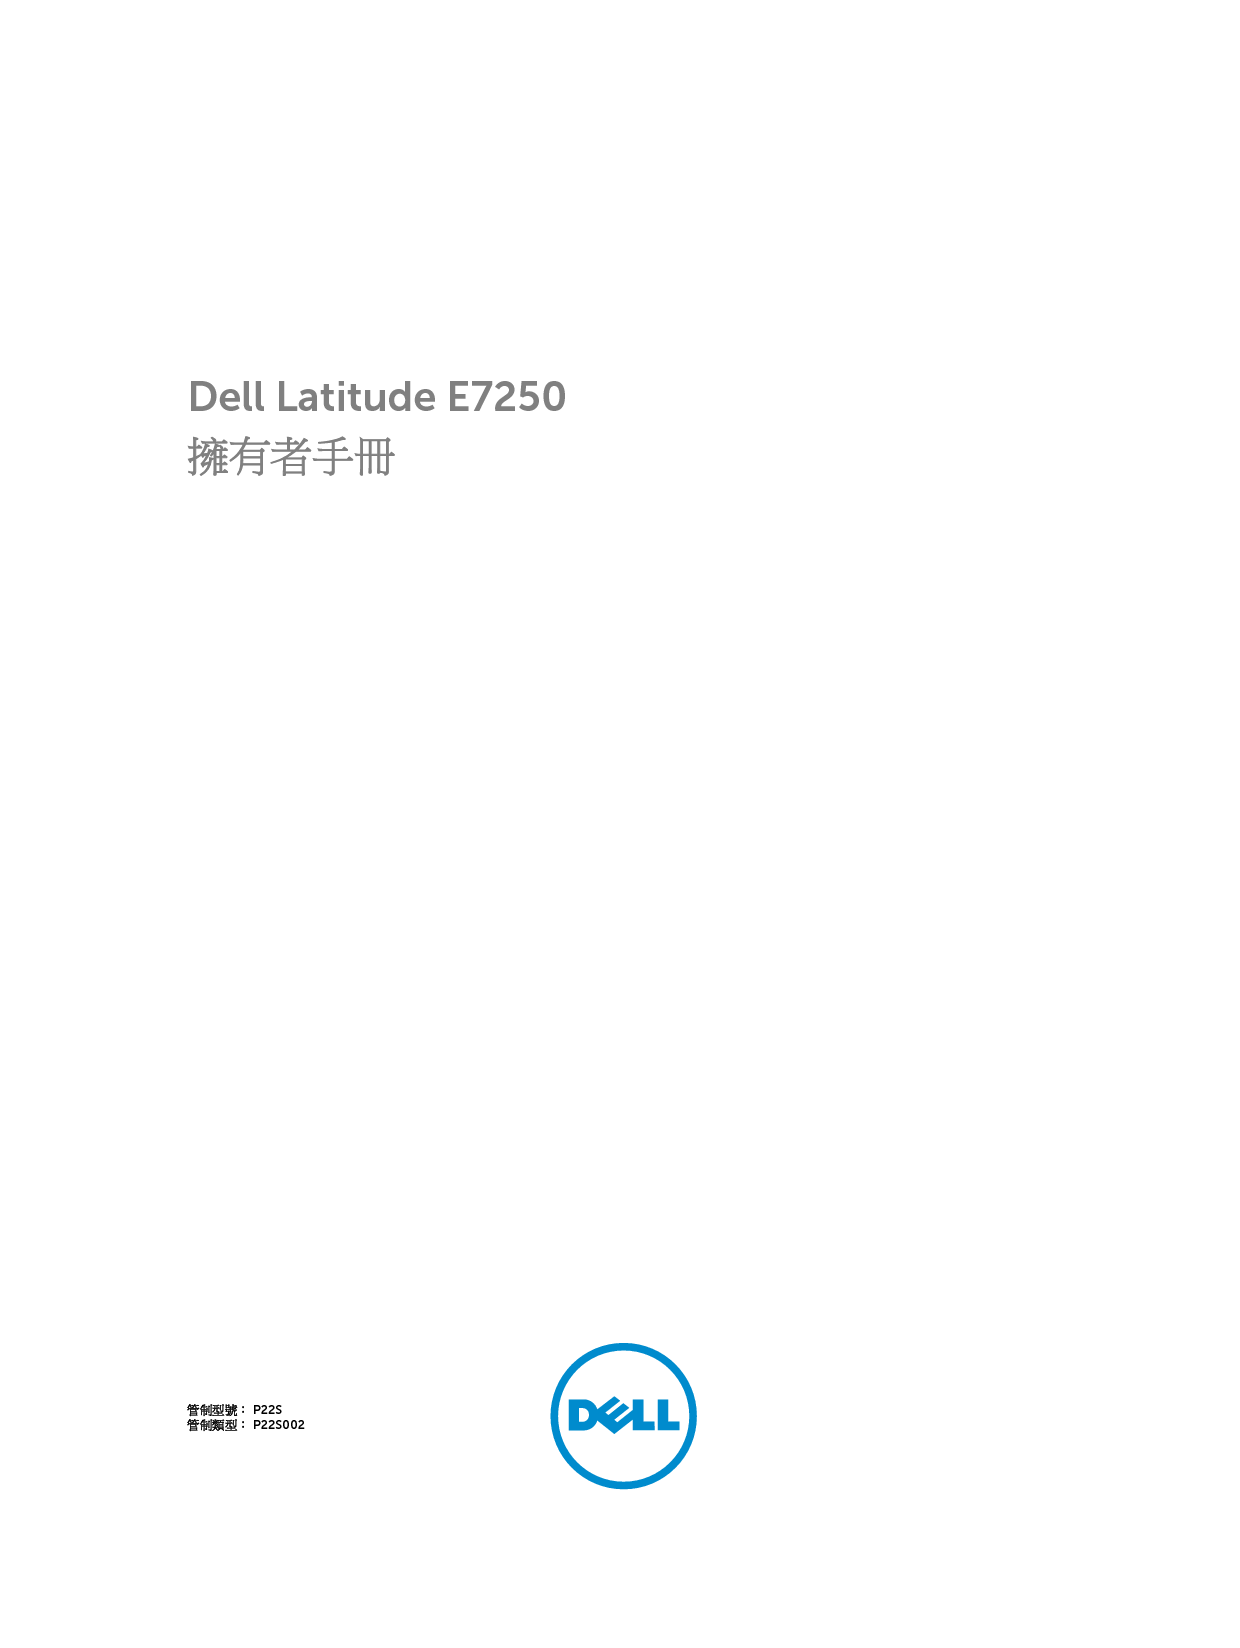 戴尔 Dell Latitude E7250 繁体 用户手册 封面